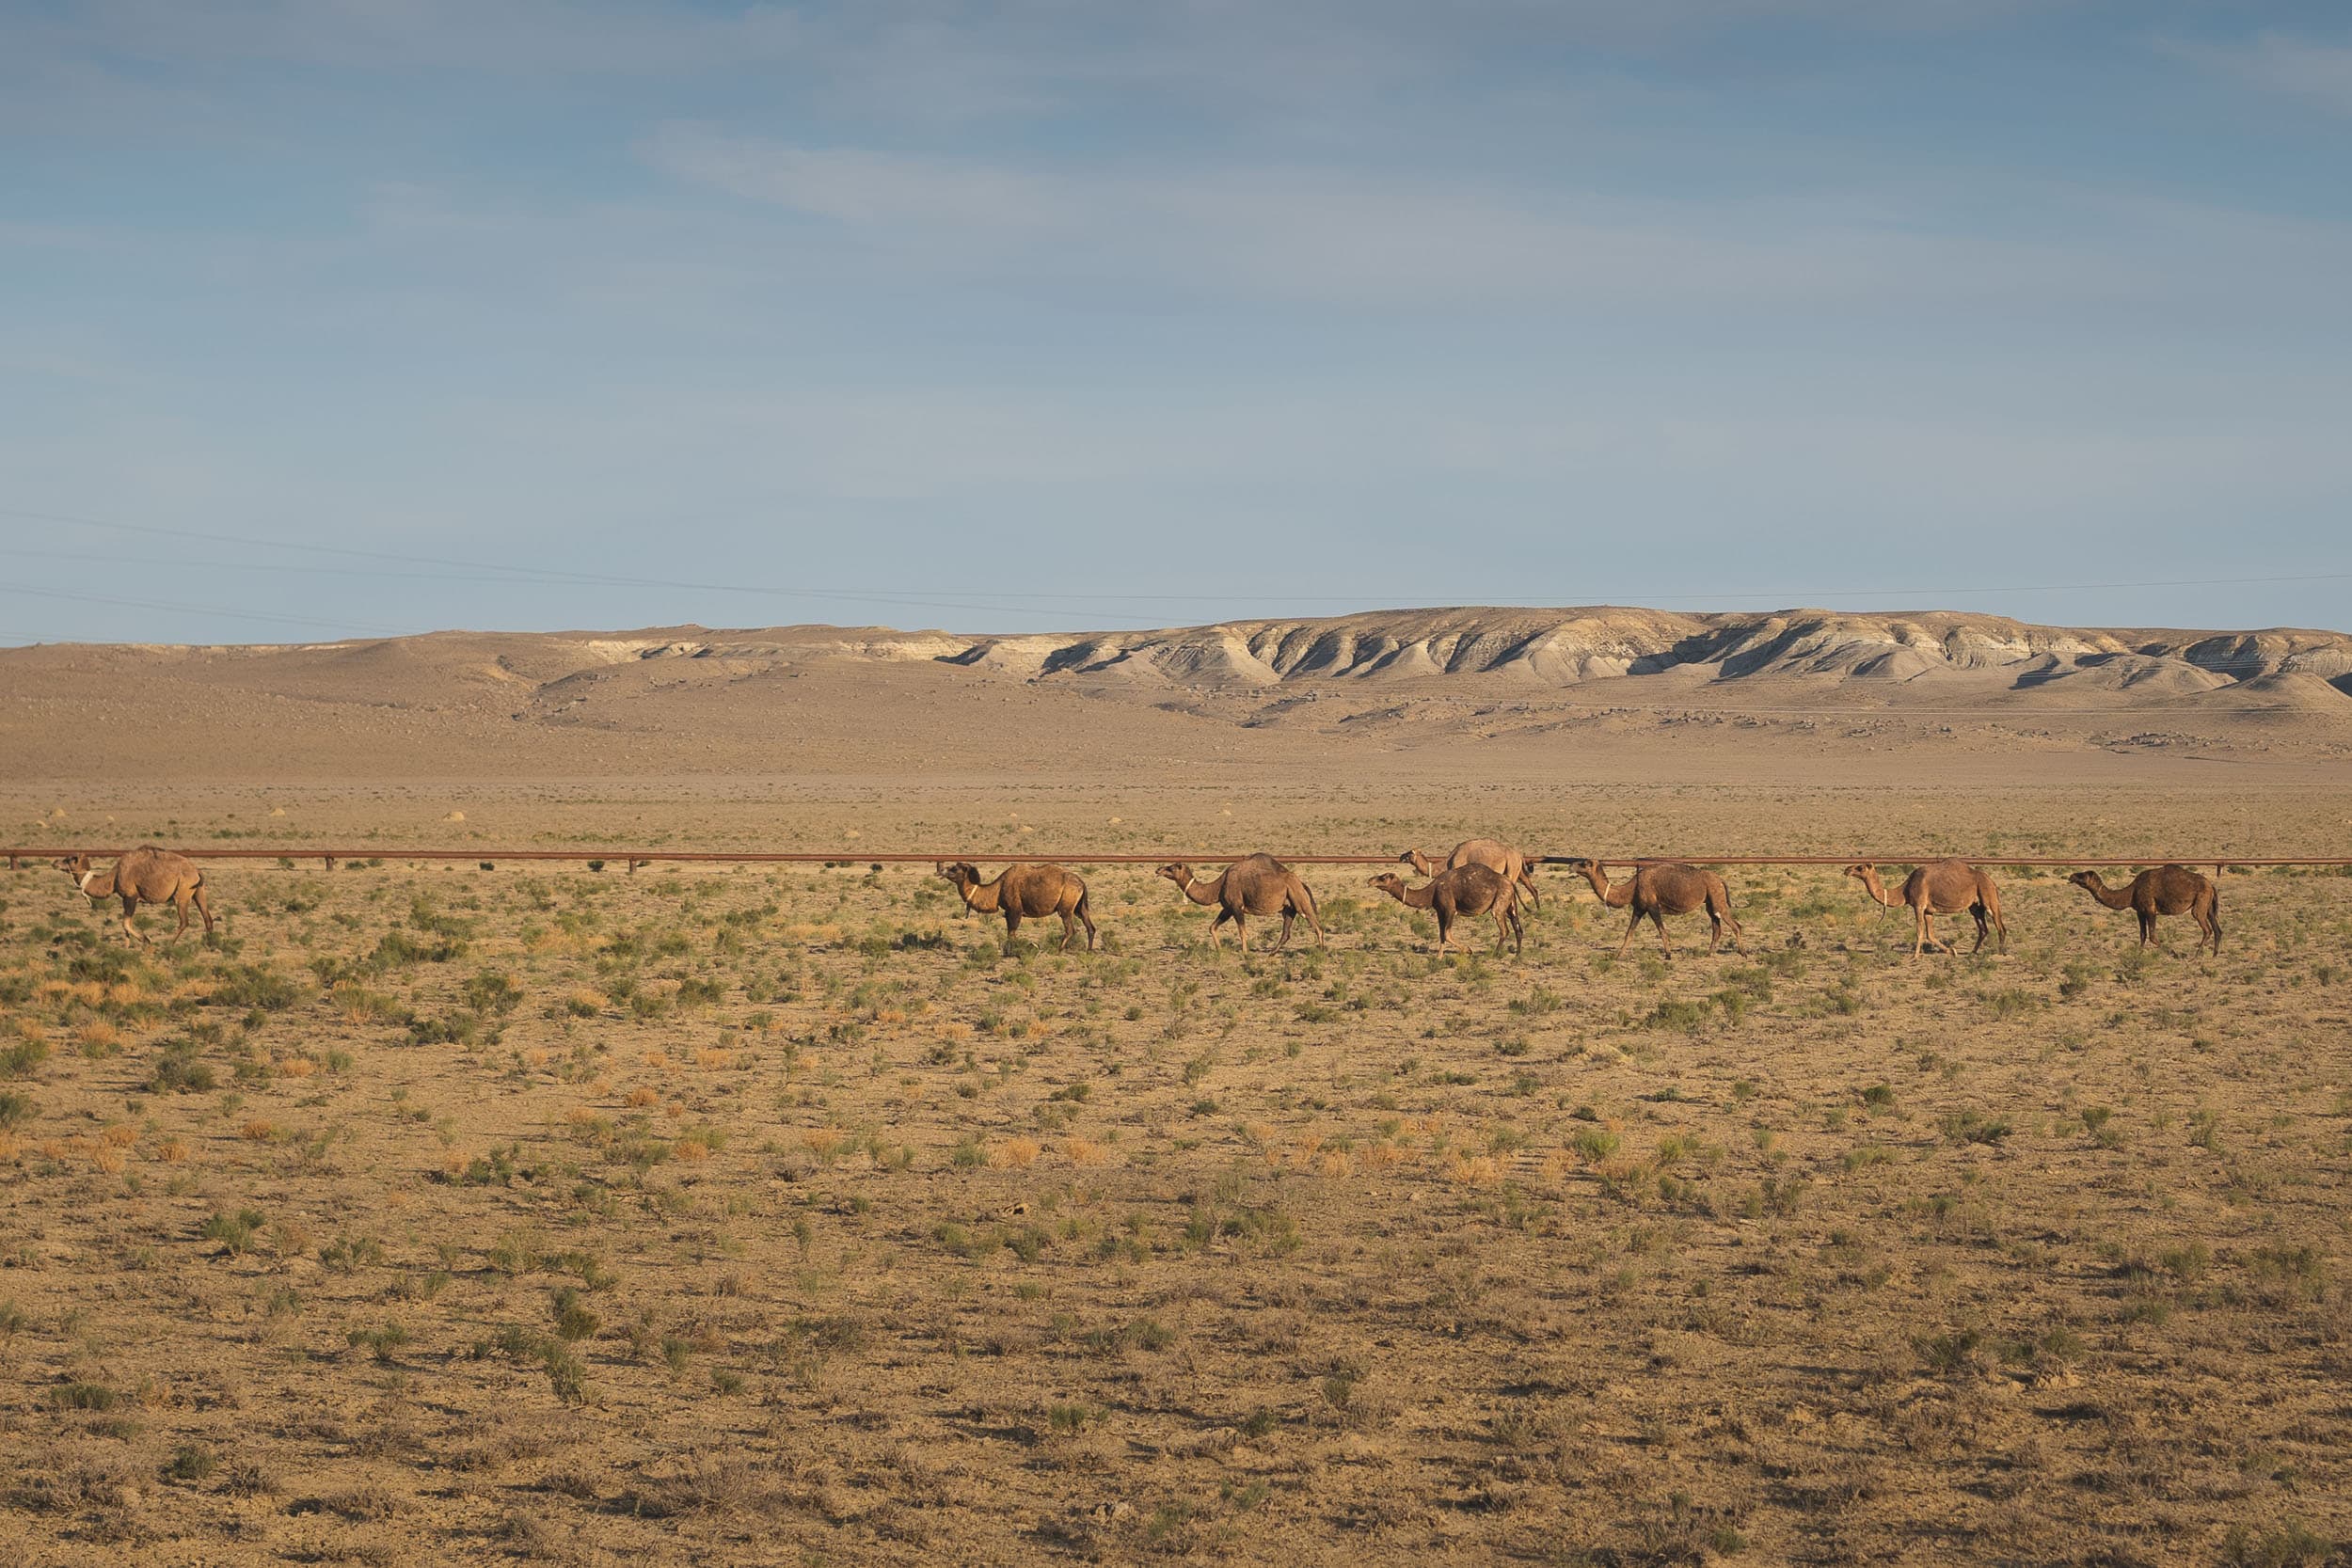 Camel caravan in Kazakhstan desert